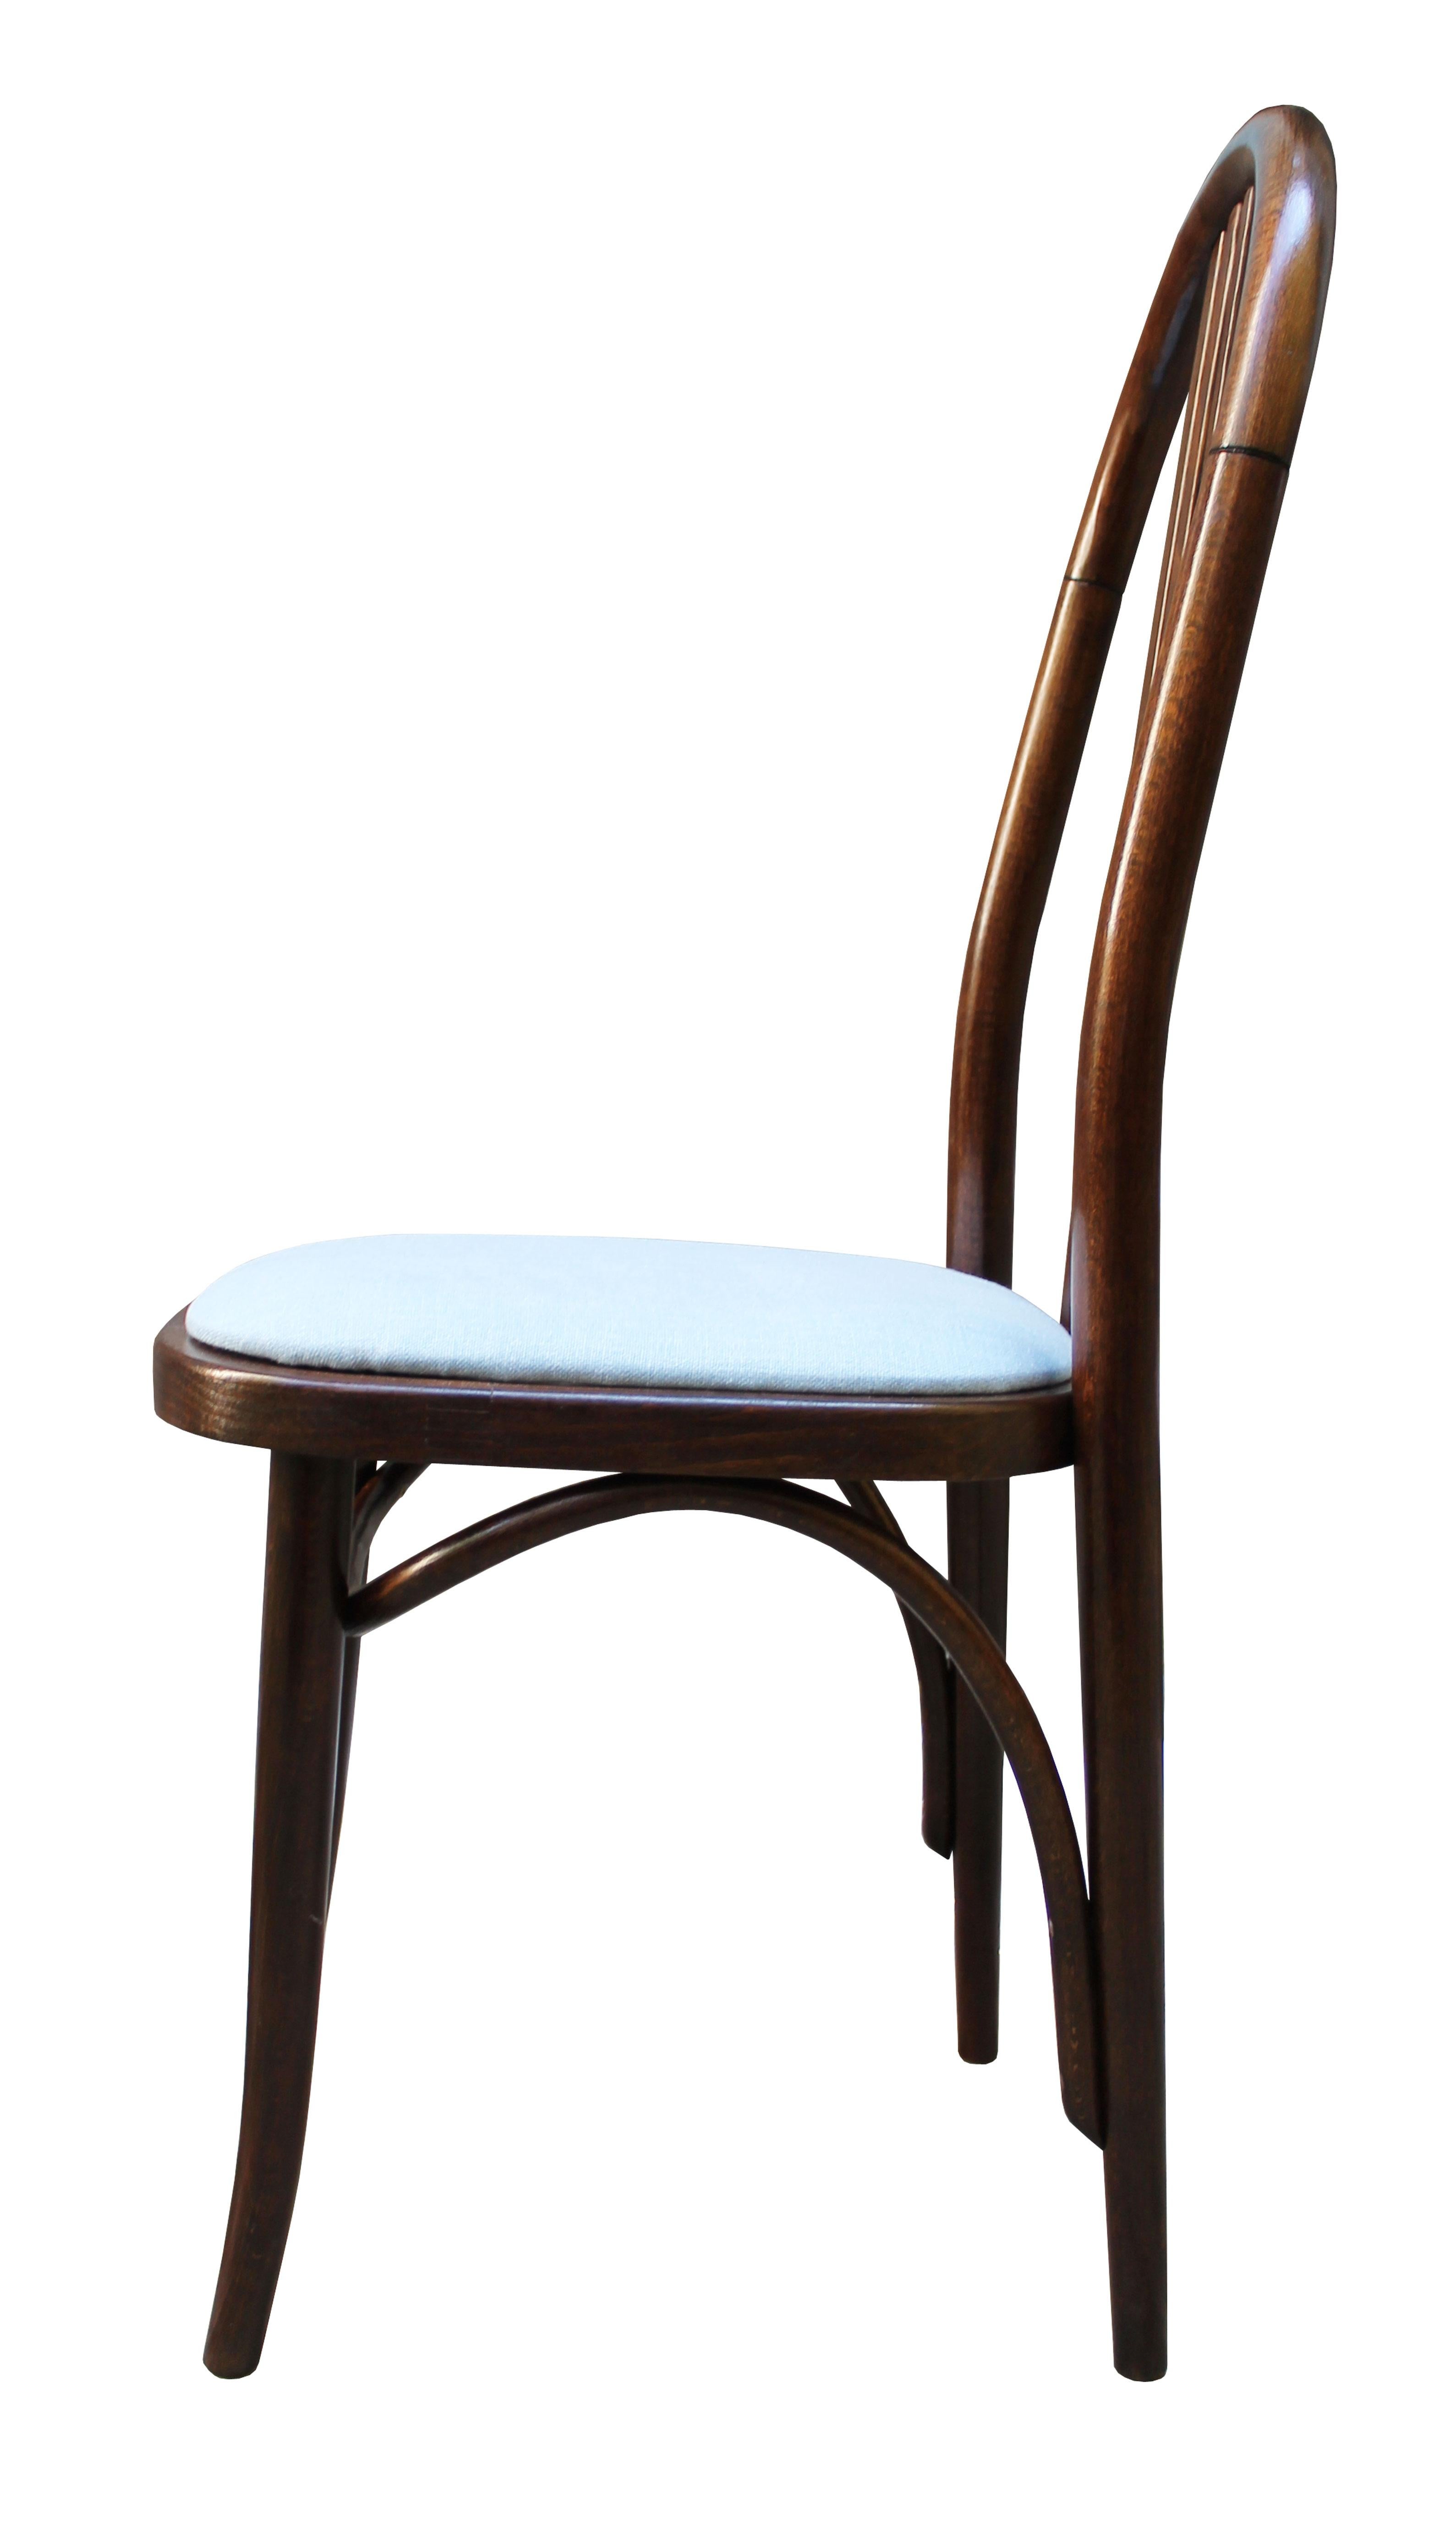 Czech 1980's Postmodernist Chair Model No. 45 by Josef Macek for TON For Sale